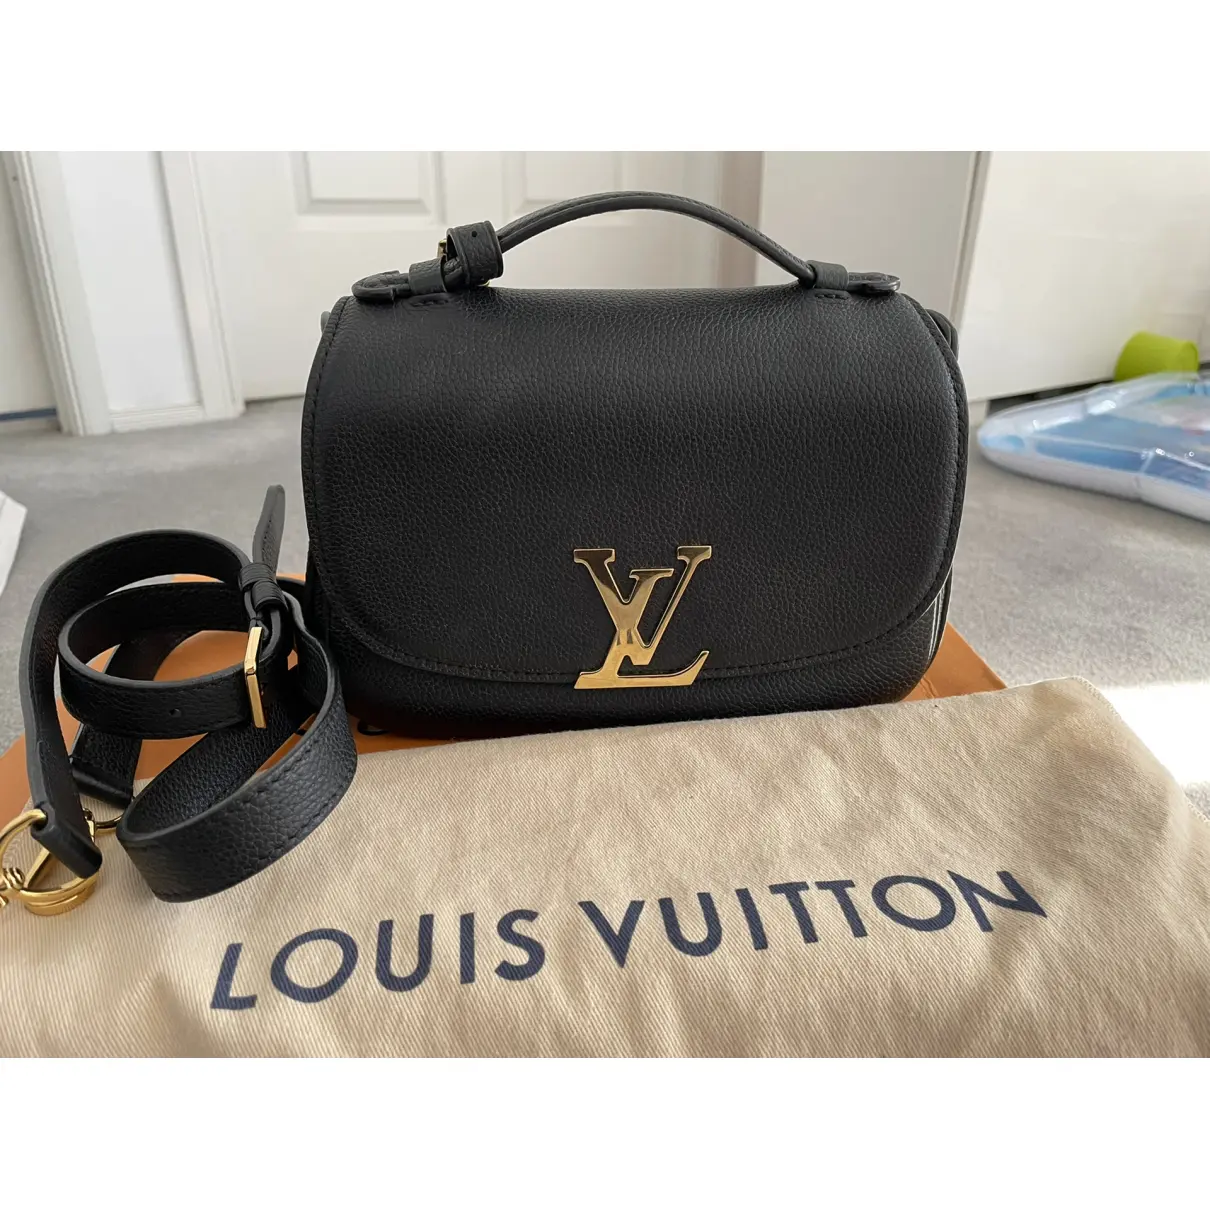 Buy Louis Vuitton Neo Vivienne leather crossbody bag online